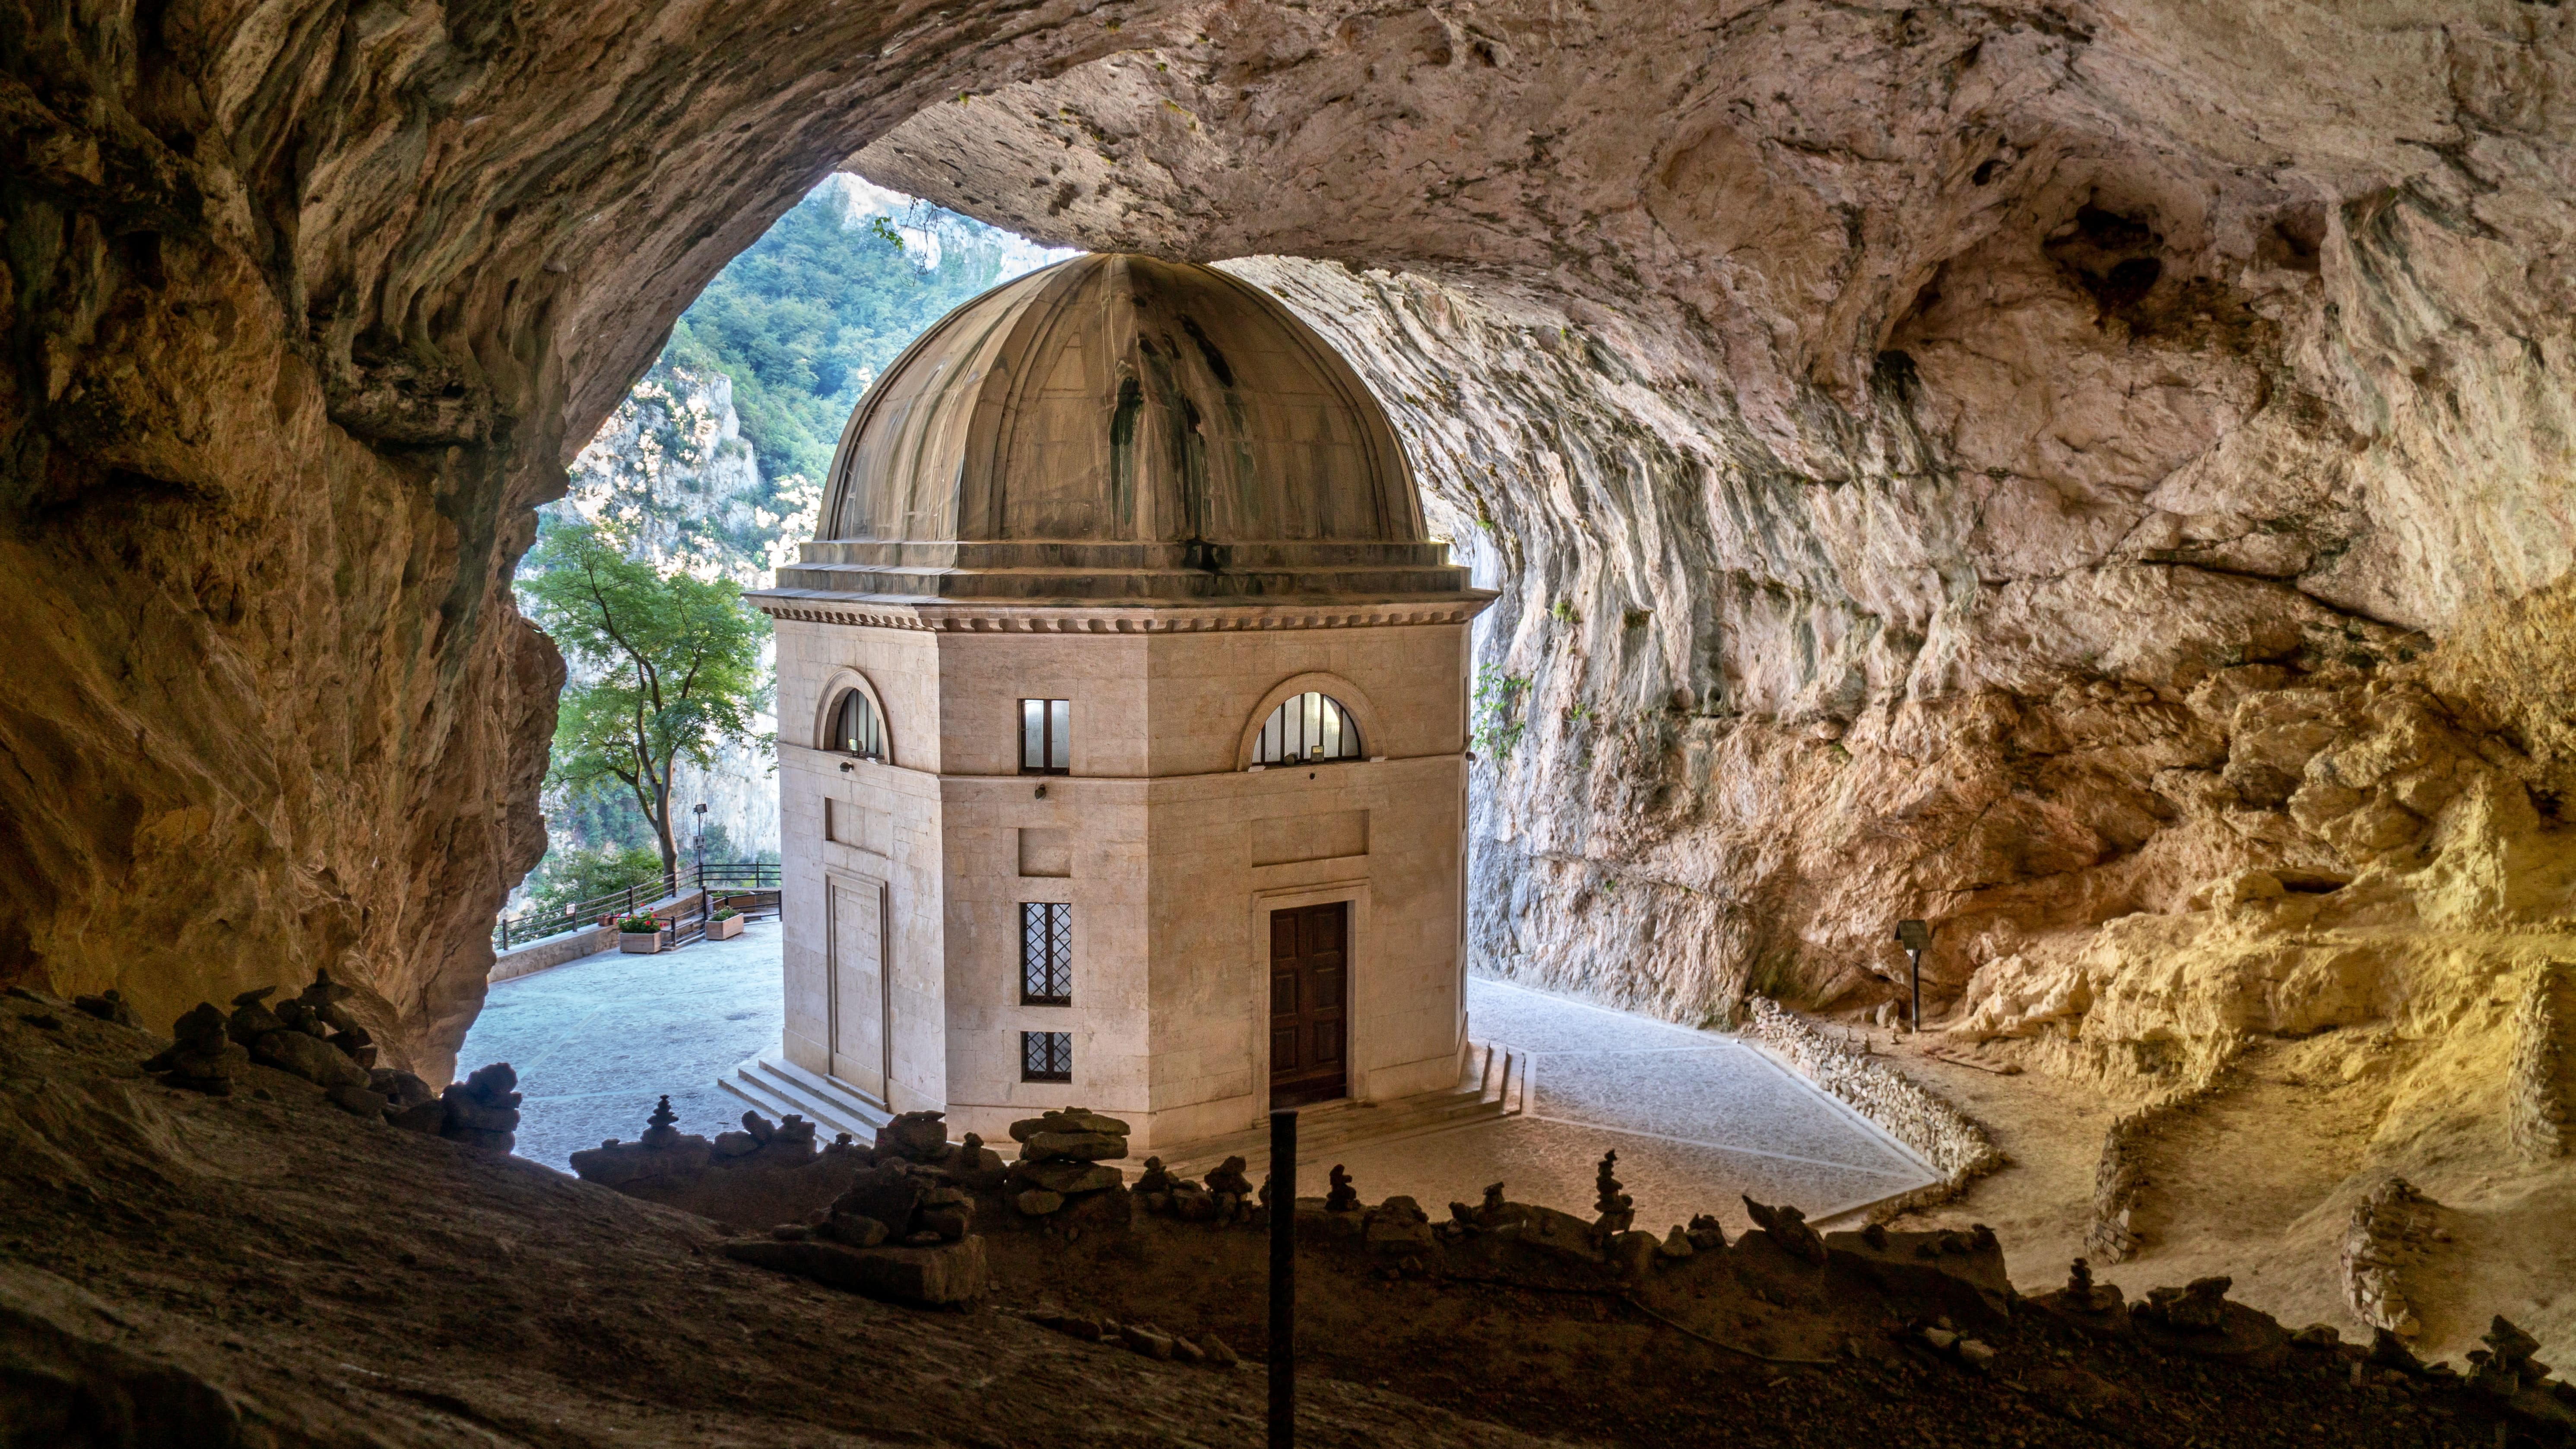 An ancient church in a cave, il tempio del valadier, the valadier's temple in Ancona.